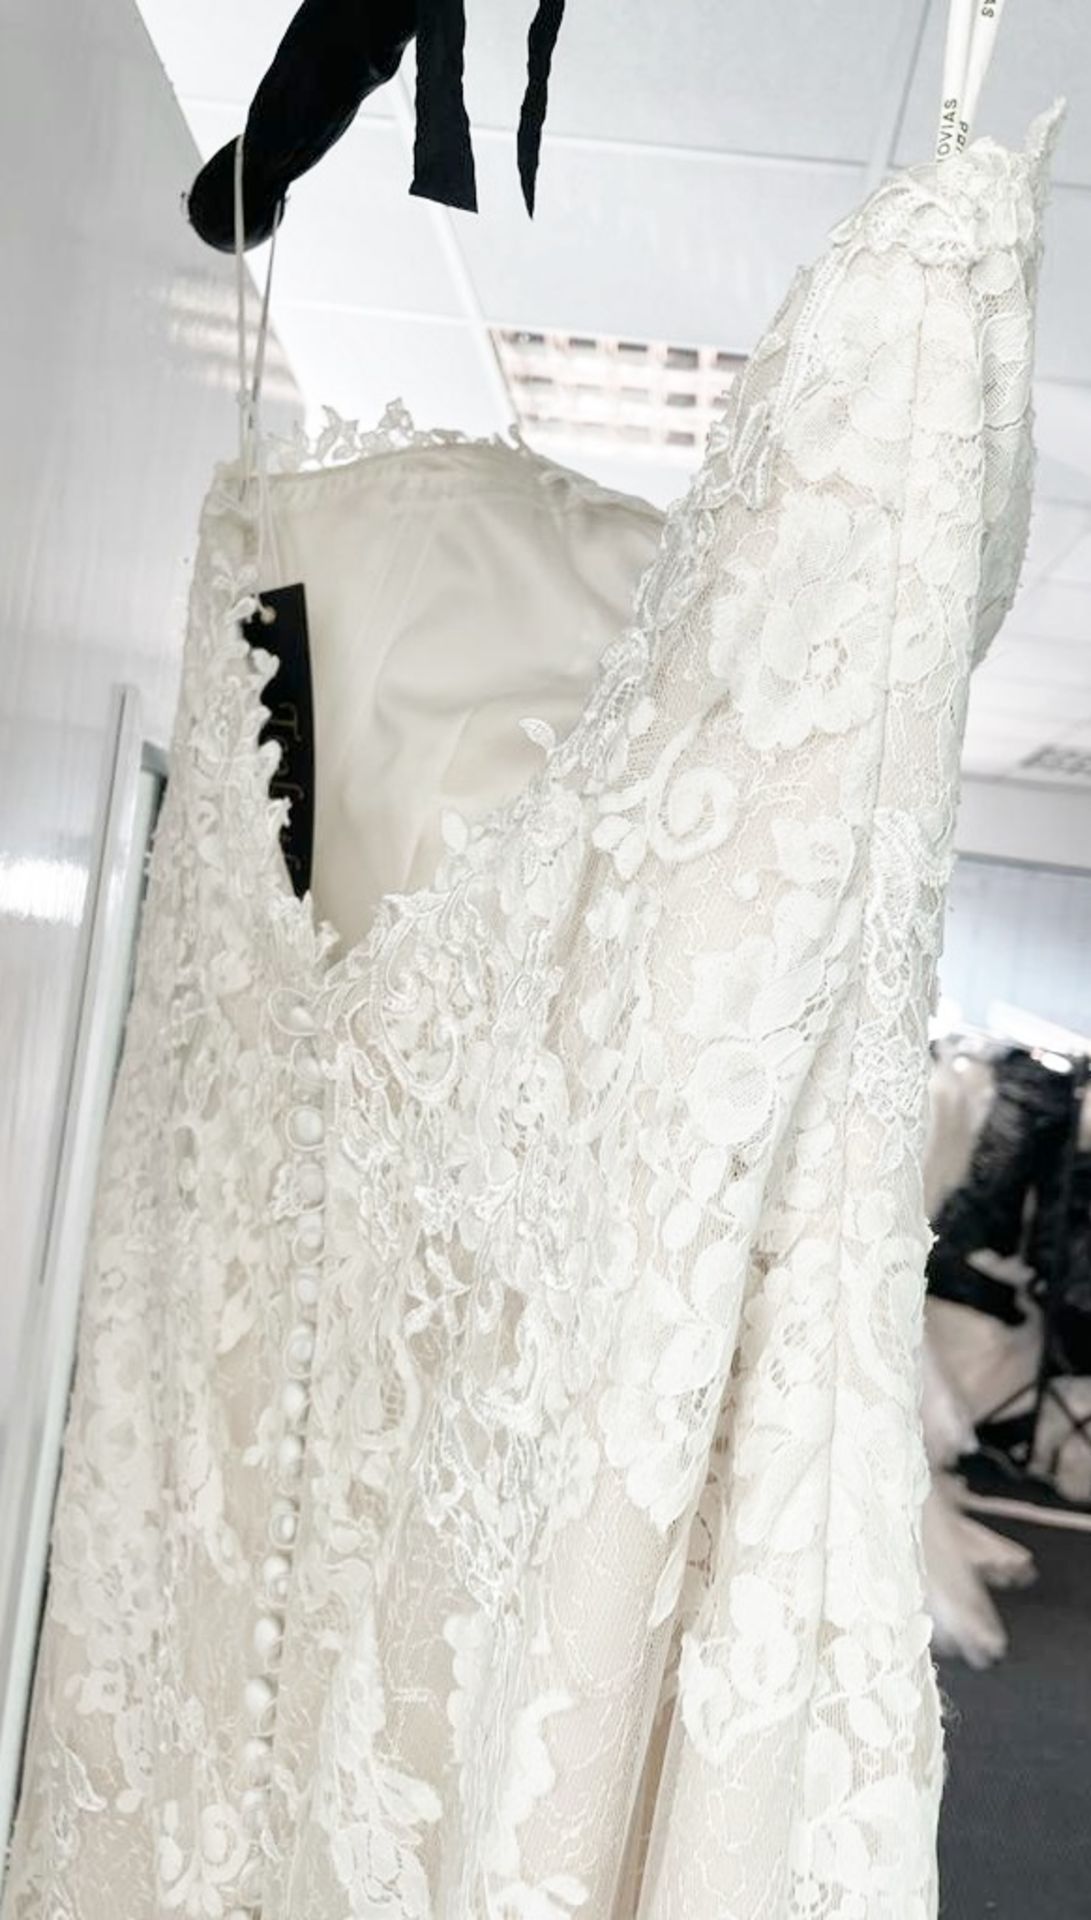 1 x PRONOVIAS 'Princia' Designer Wedding Dress Bridal Gown - Size: UK 12 - Original RRP £1,850 - Image 8 of 17